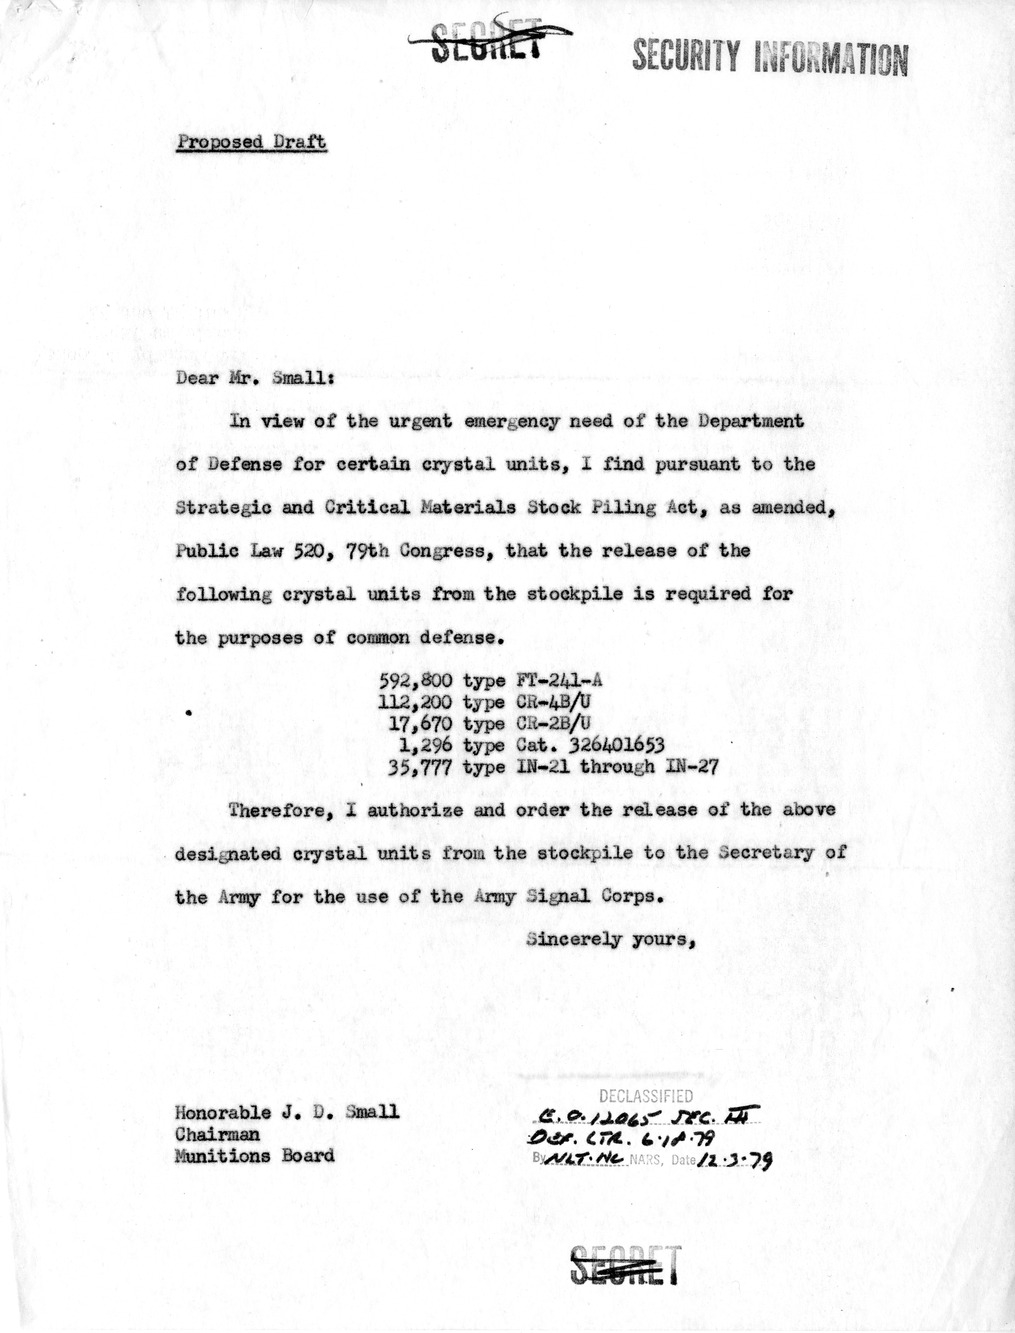 Memorandum from Secretary of Defense Robert Lovett to President Harry S. Truman, with Attached Draft Letter to J. D. Small